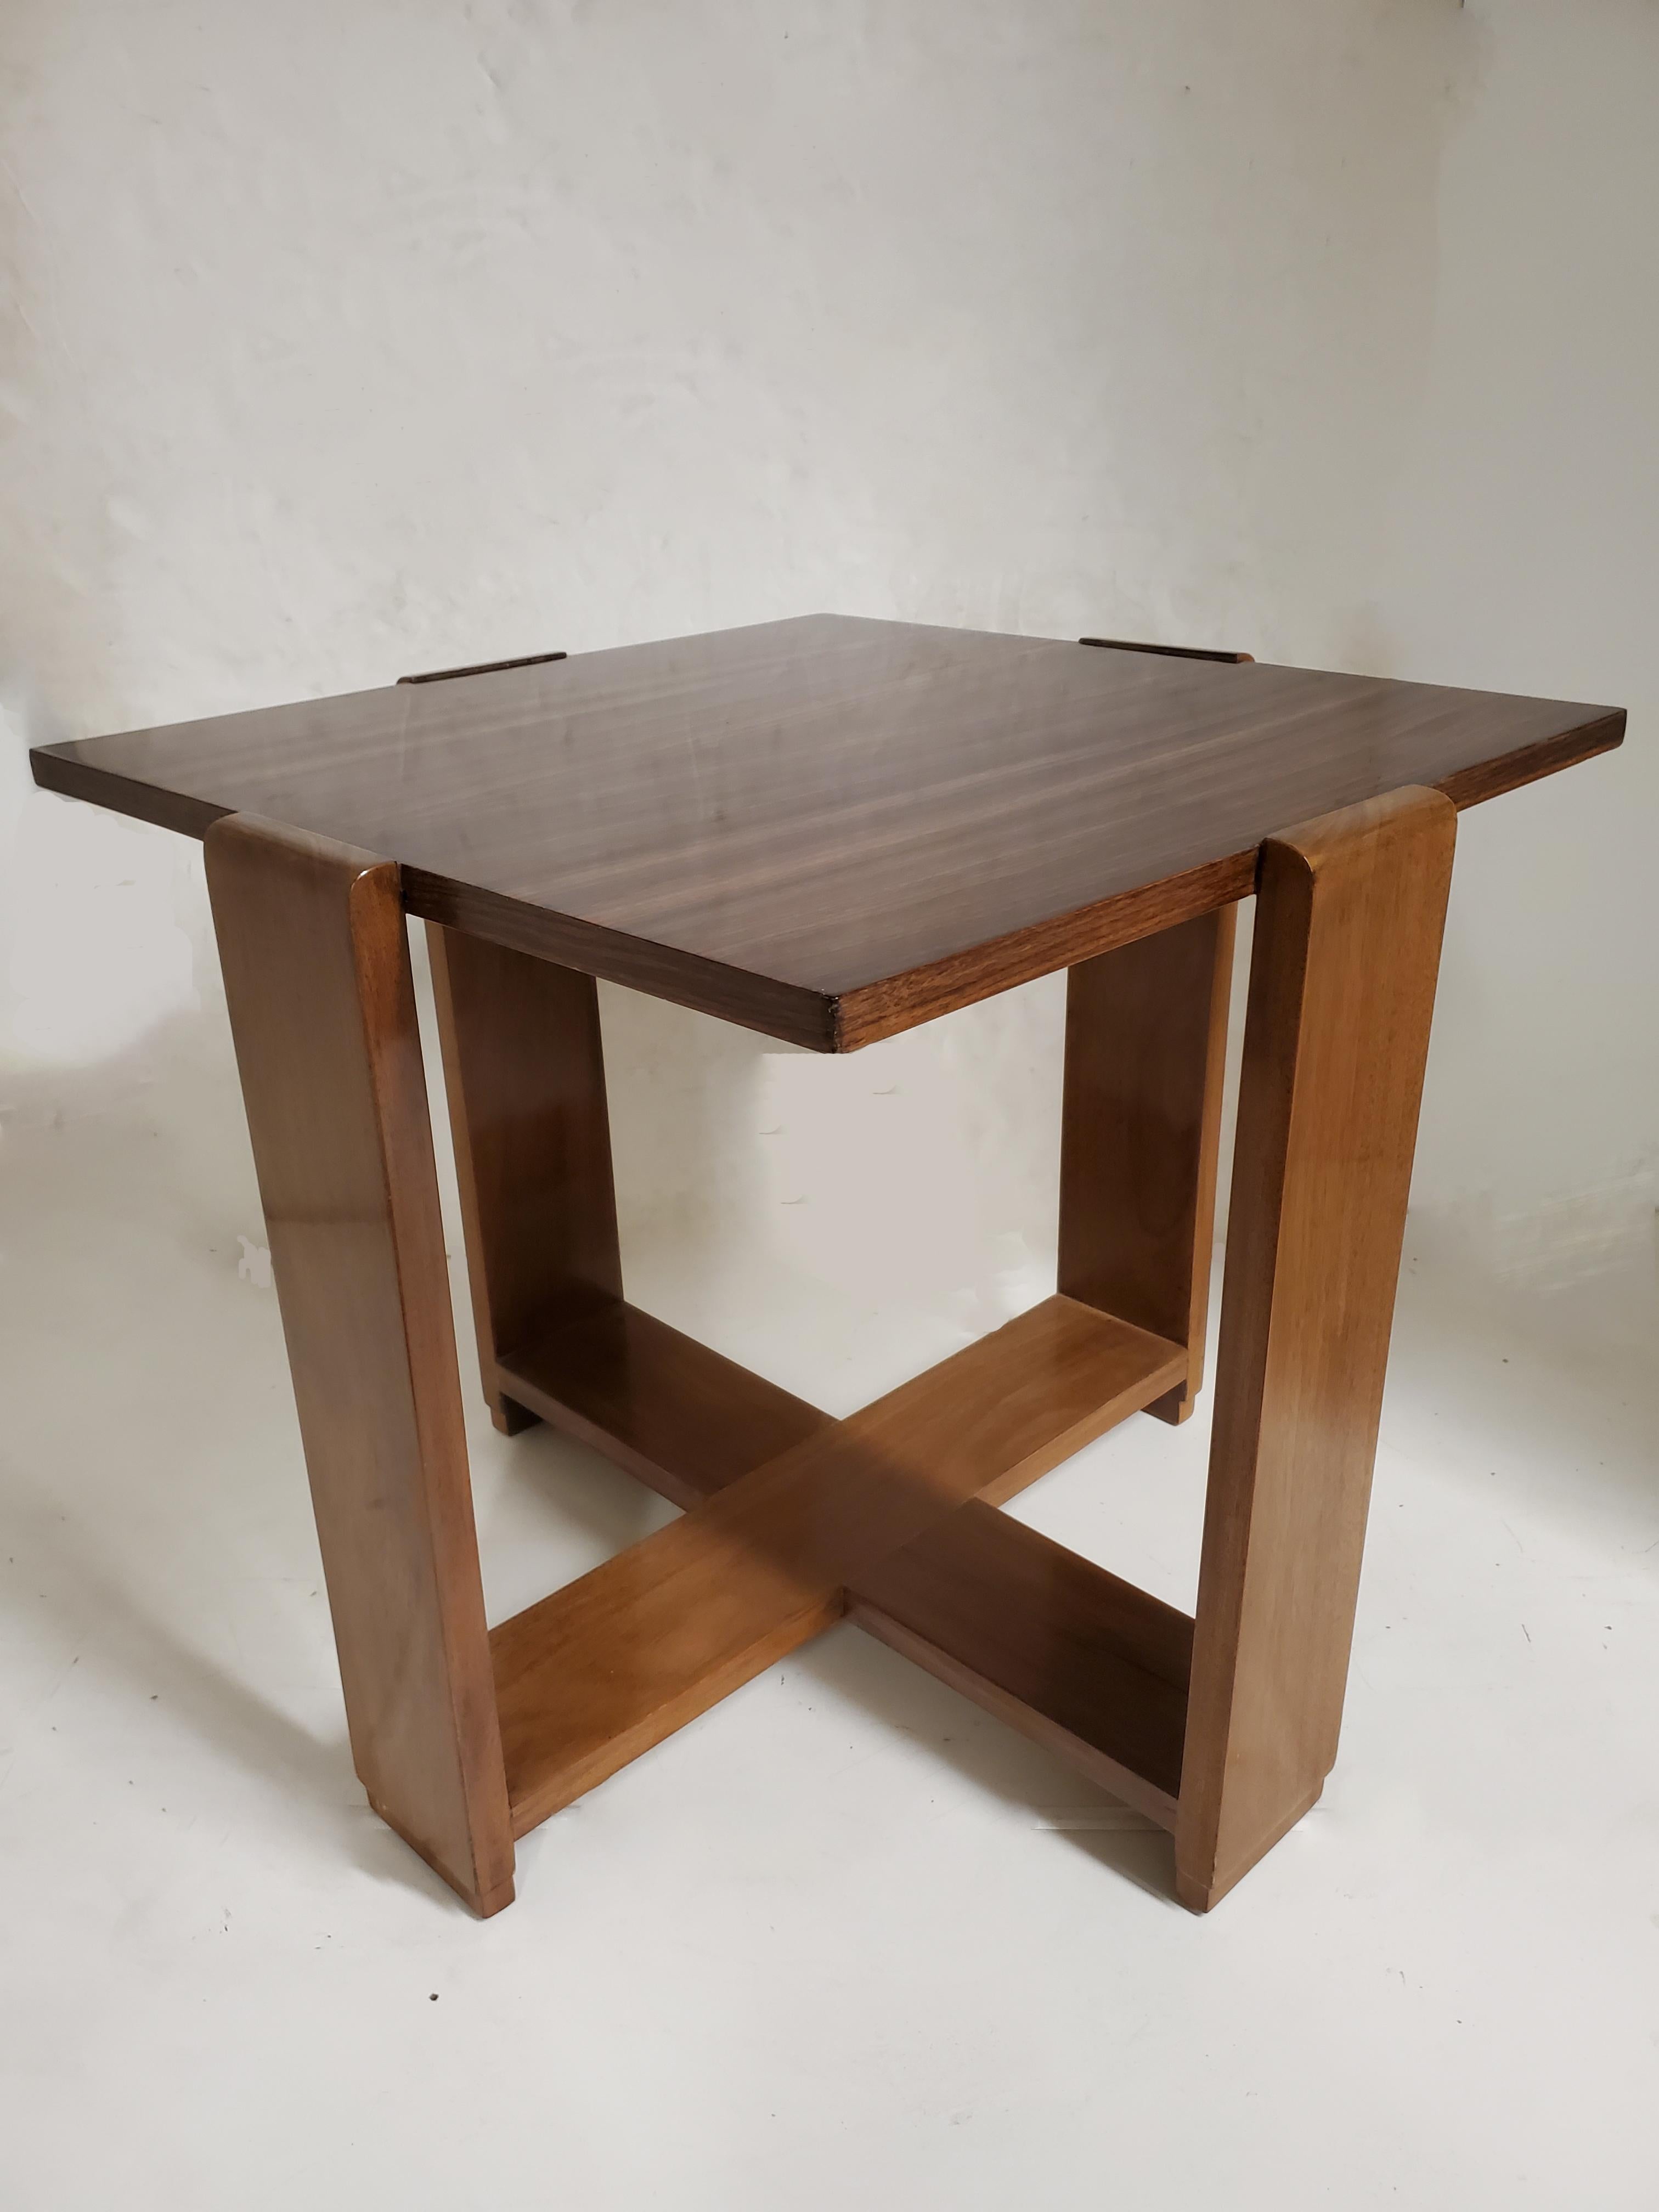 Original French Art Deco Macassar Ebony Square Table, Michel Roux-Spitz For Sale 1